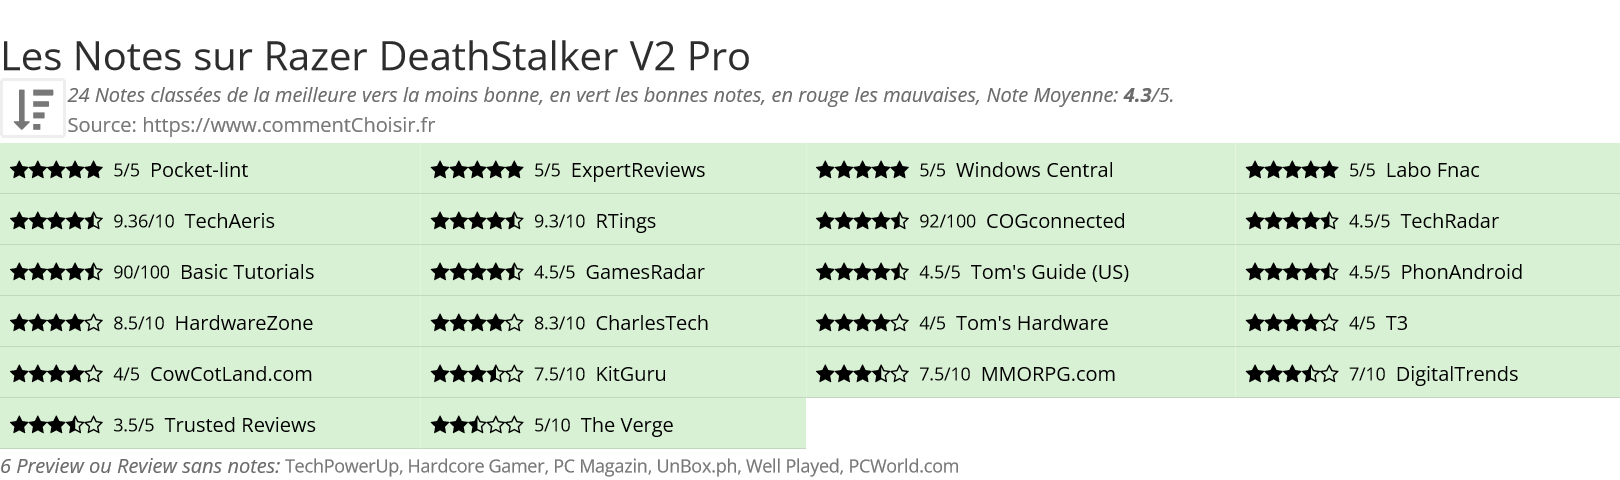 Ratings Razer DeathStalker V2 Pro